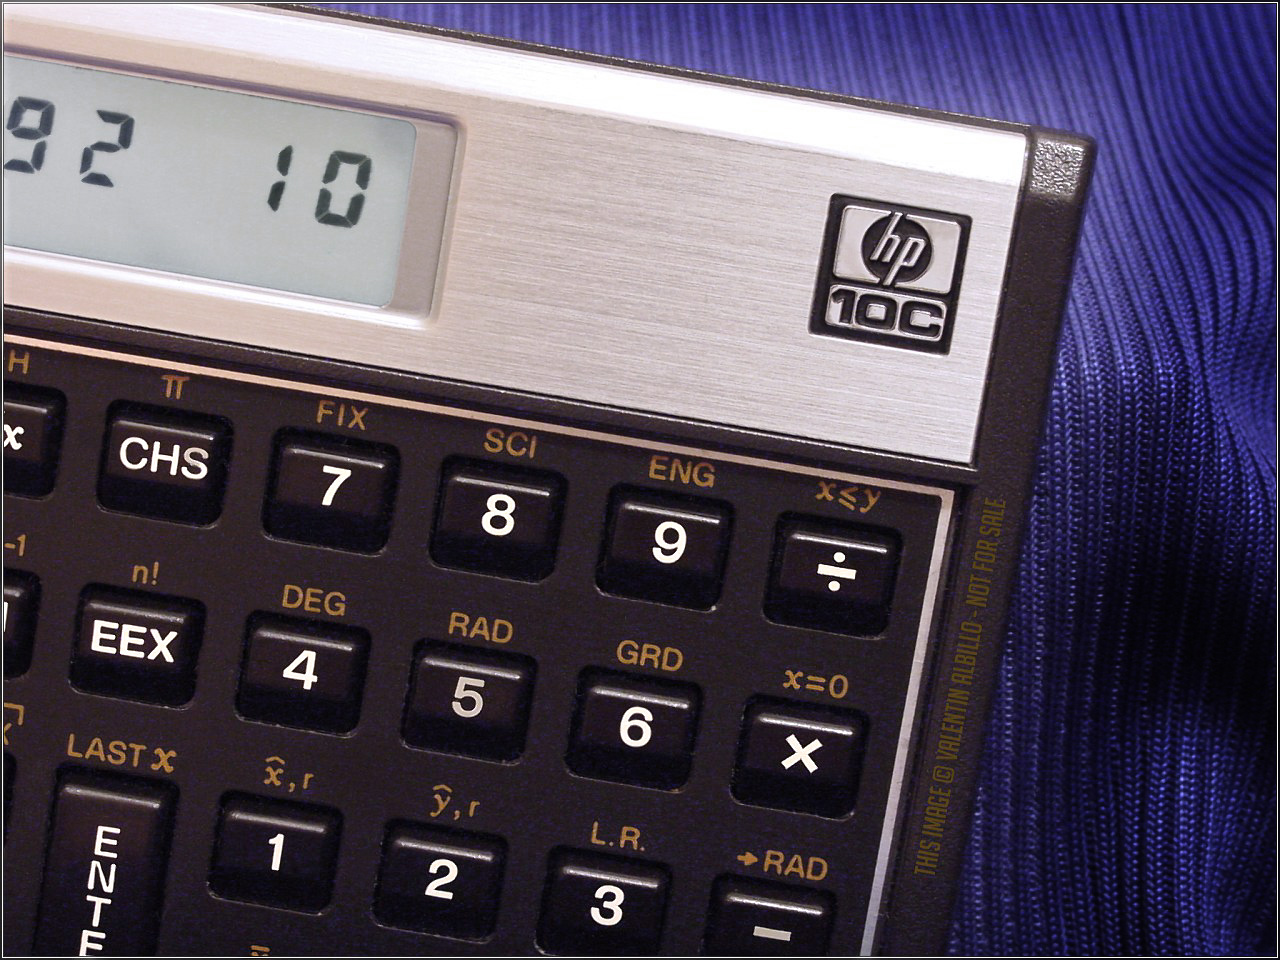 Calculatrice HP OfficeCalc 200II bureau